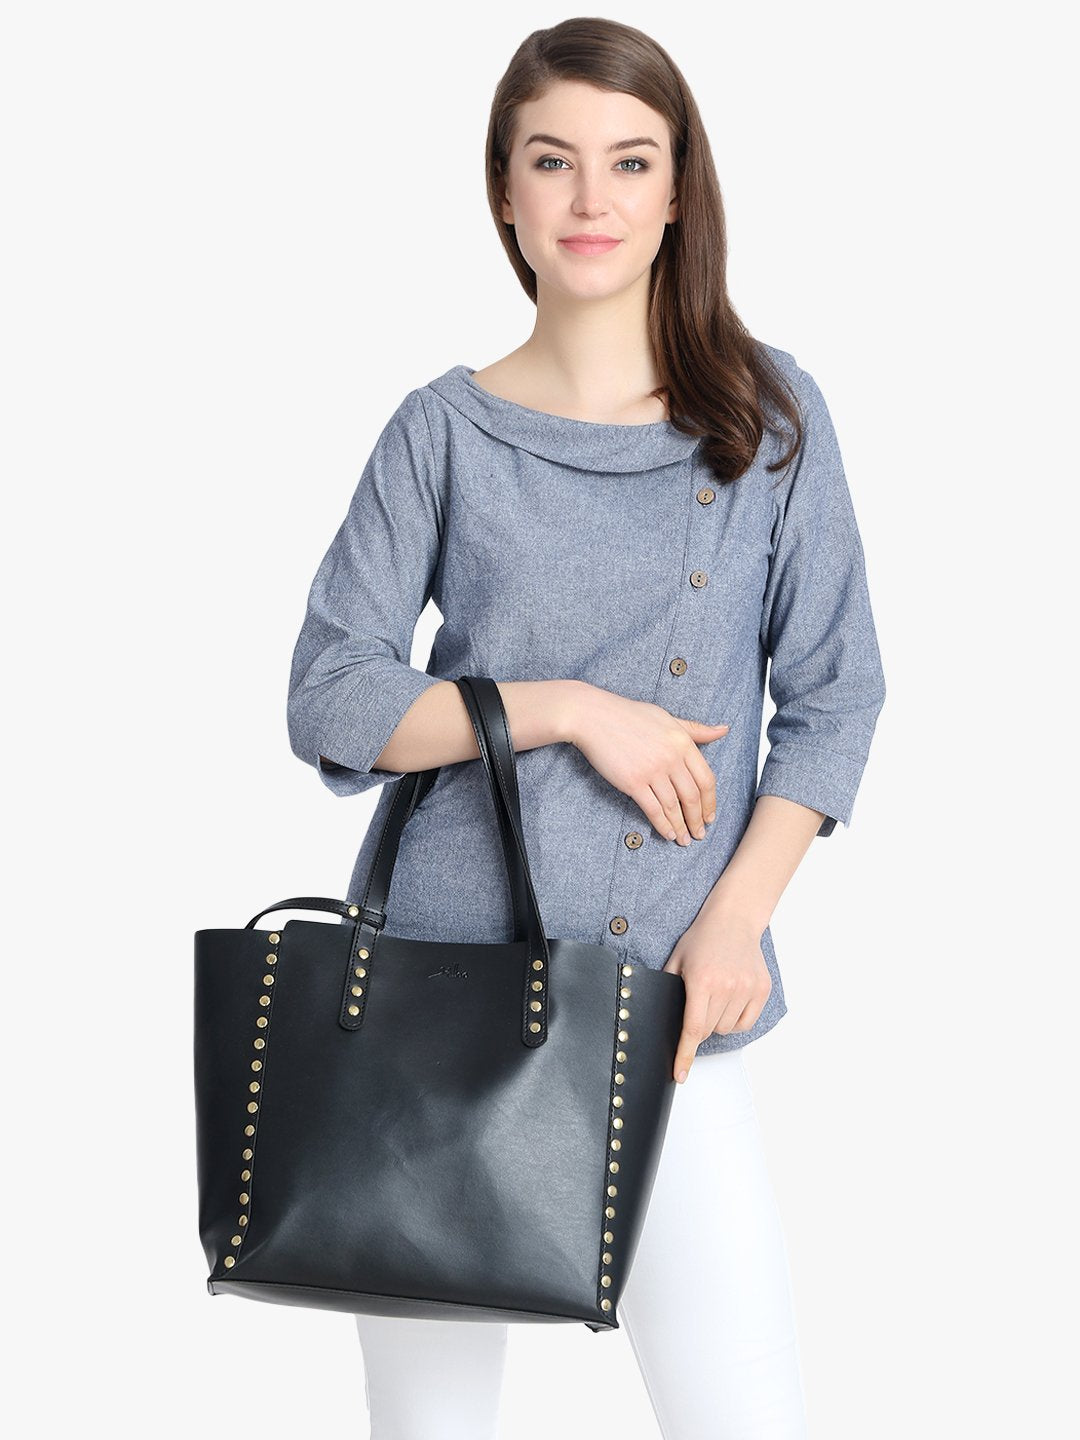 Maroon Handbags - Buy Maroon Handbags online in India